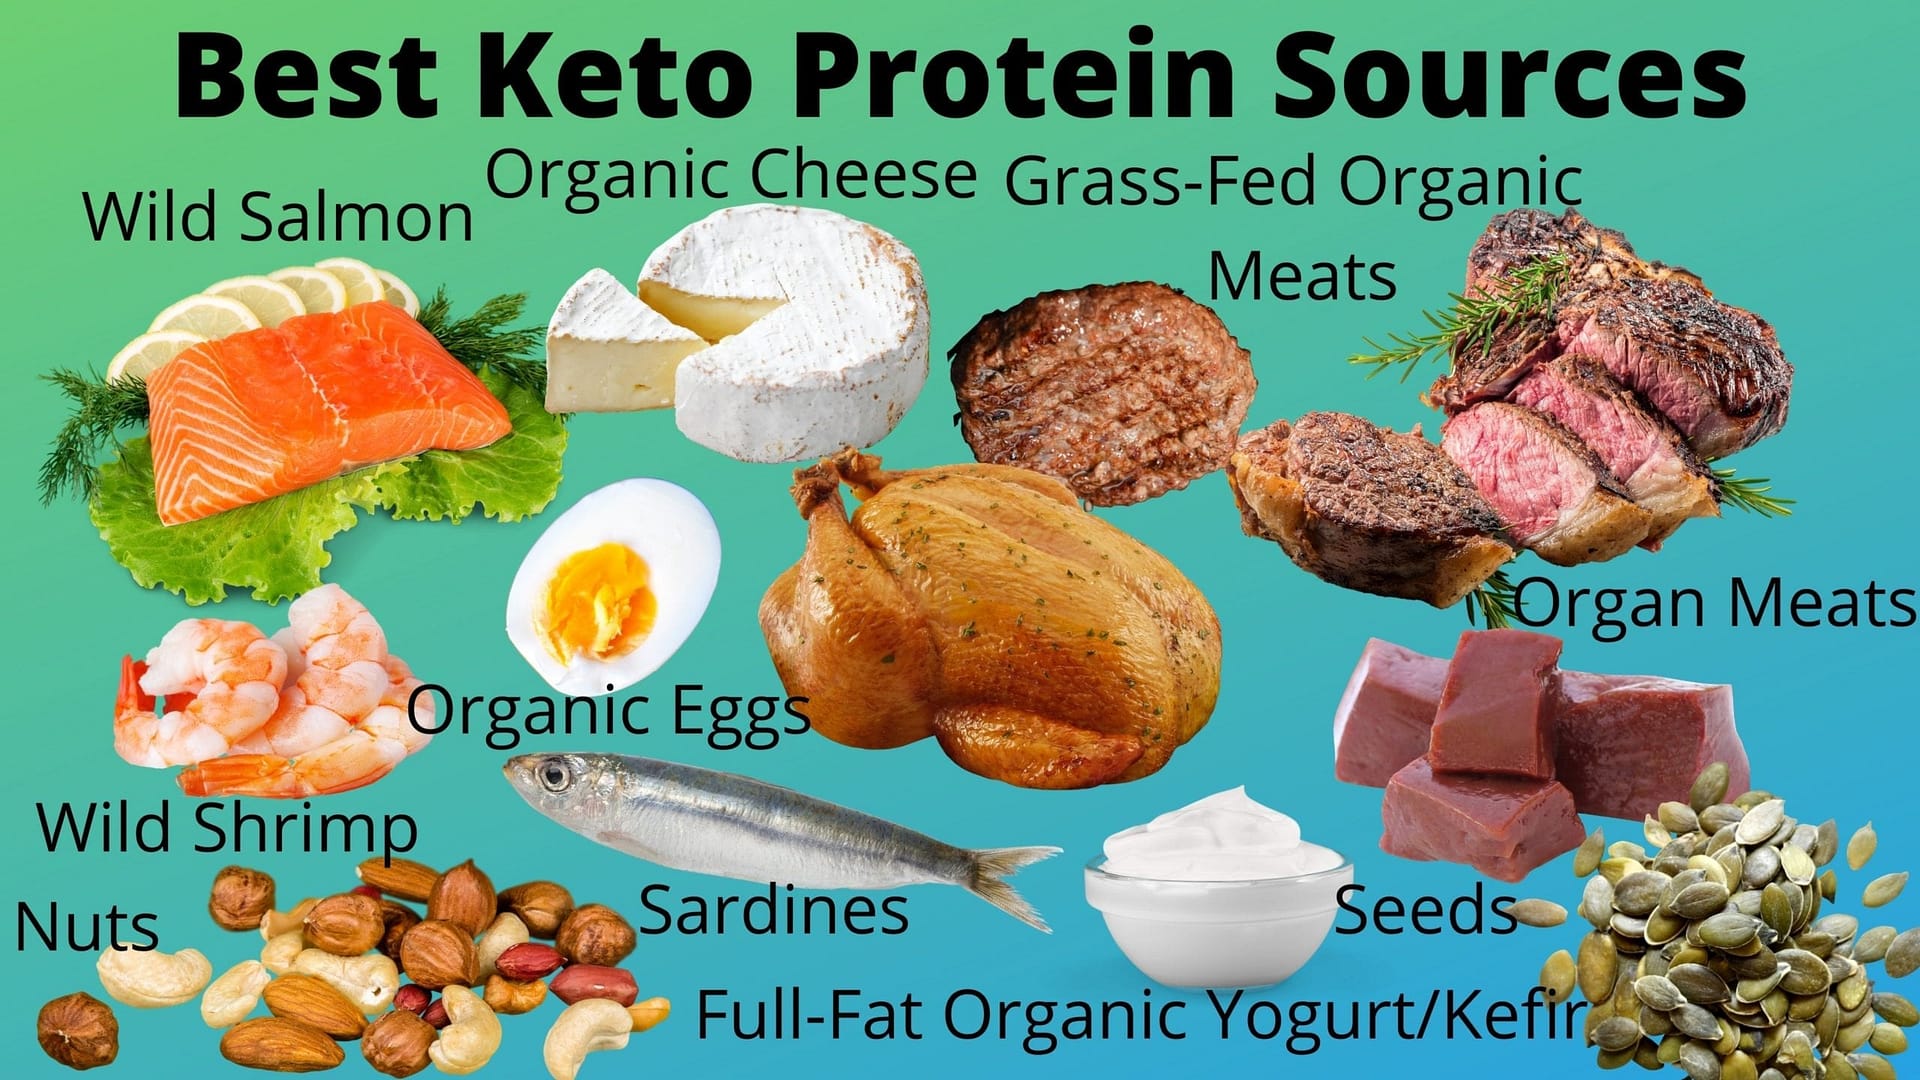 Best keto protein sources